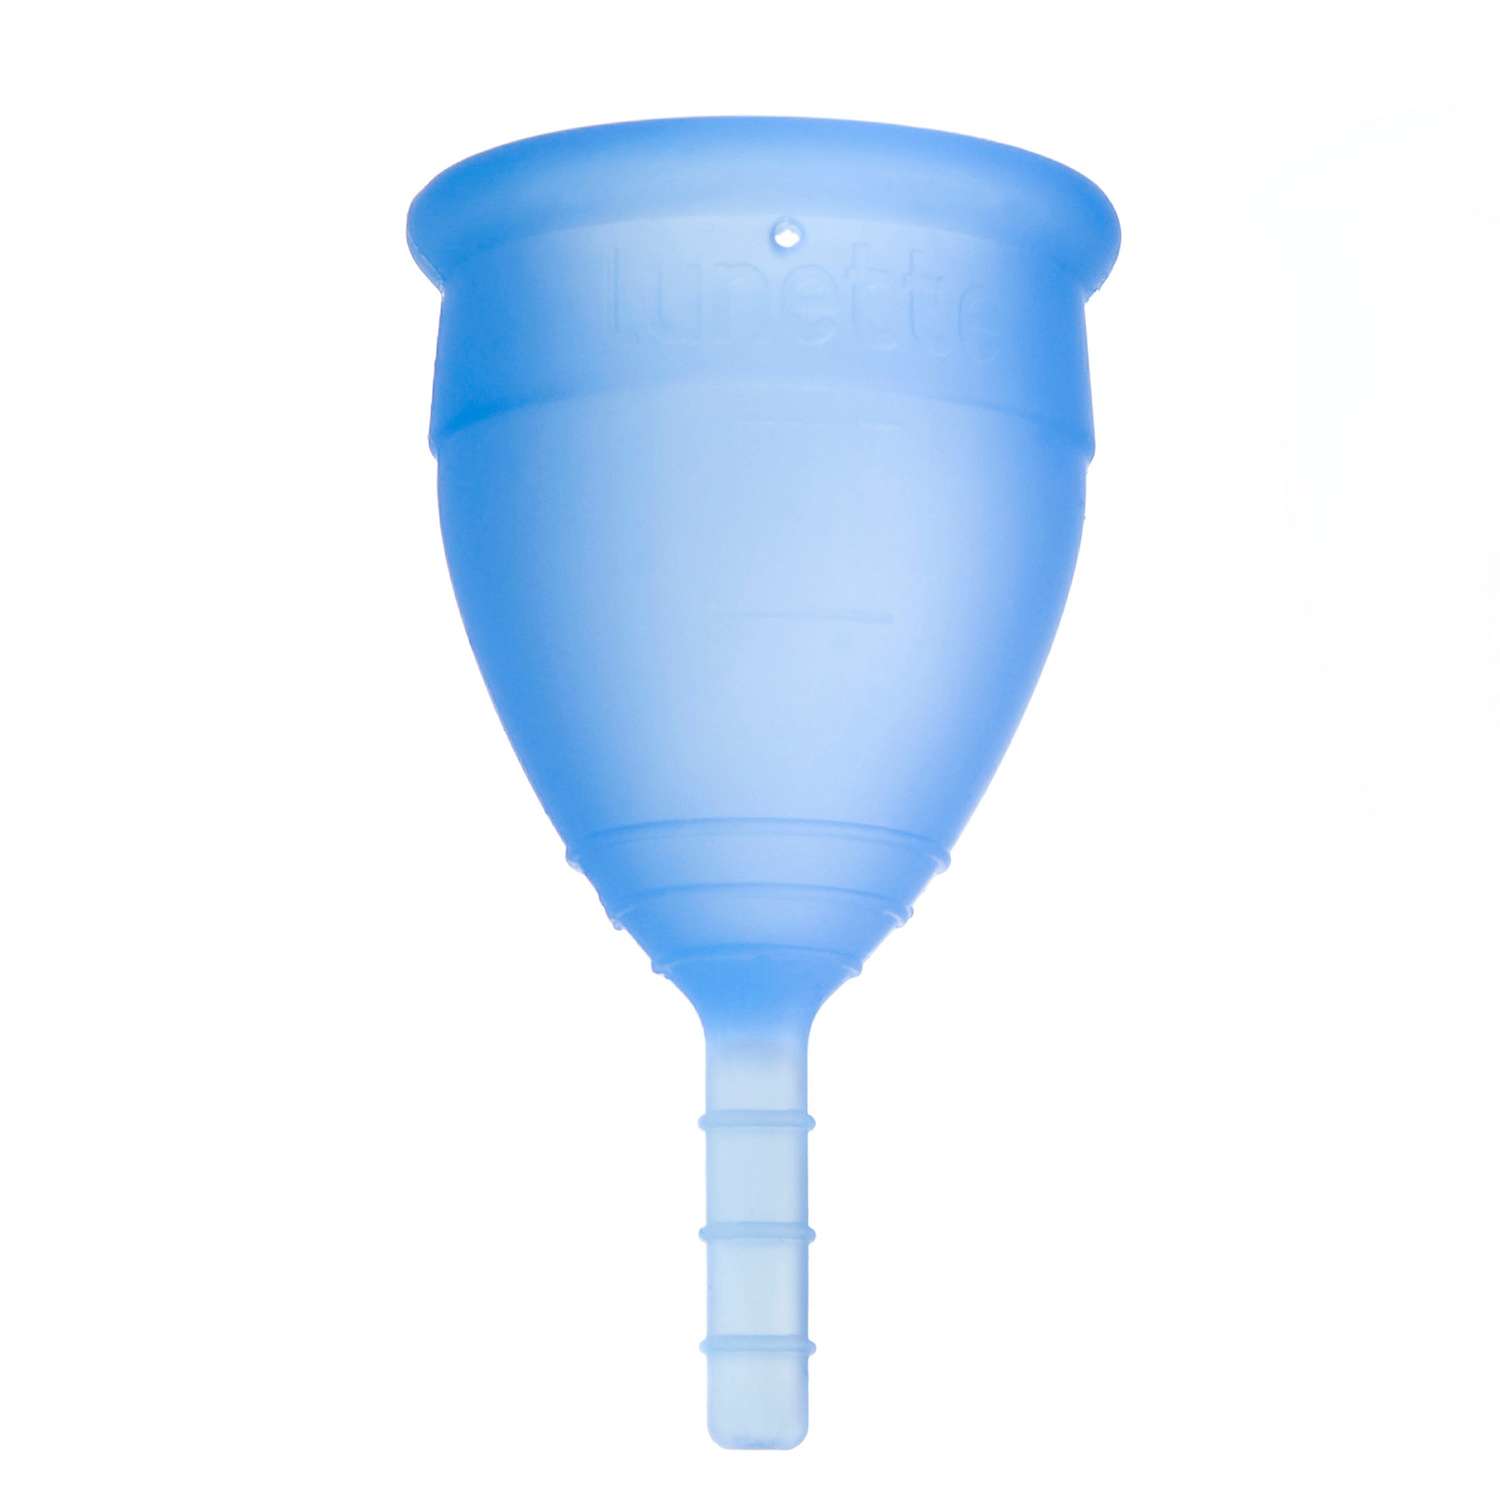 Менструальная чаша Lunette синяя Model 1 - фото 2